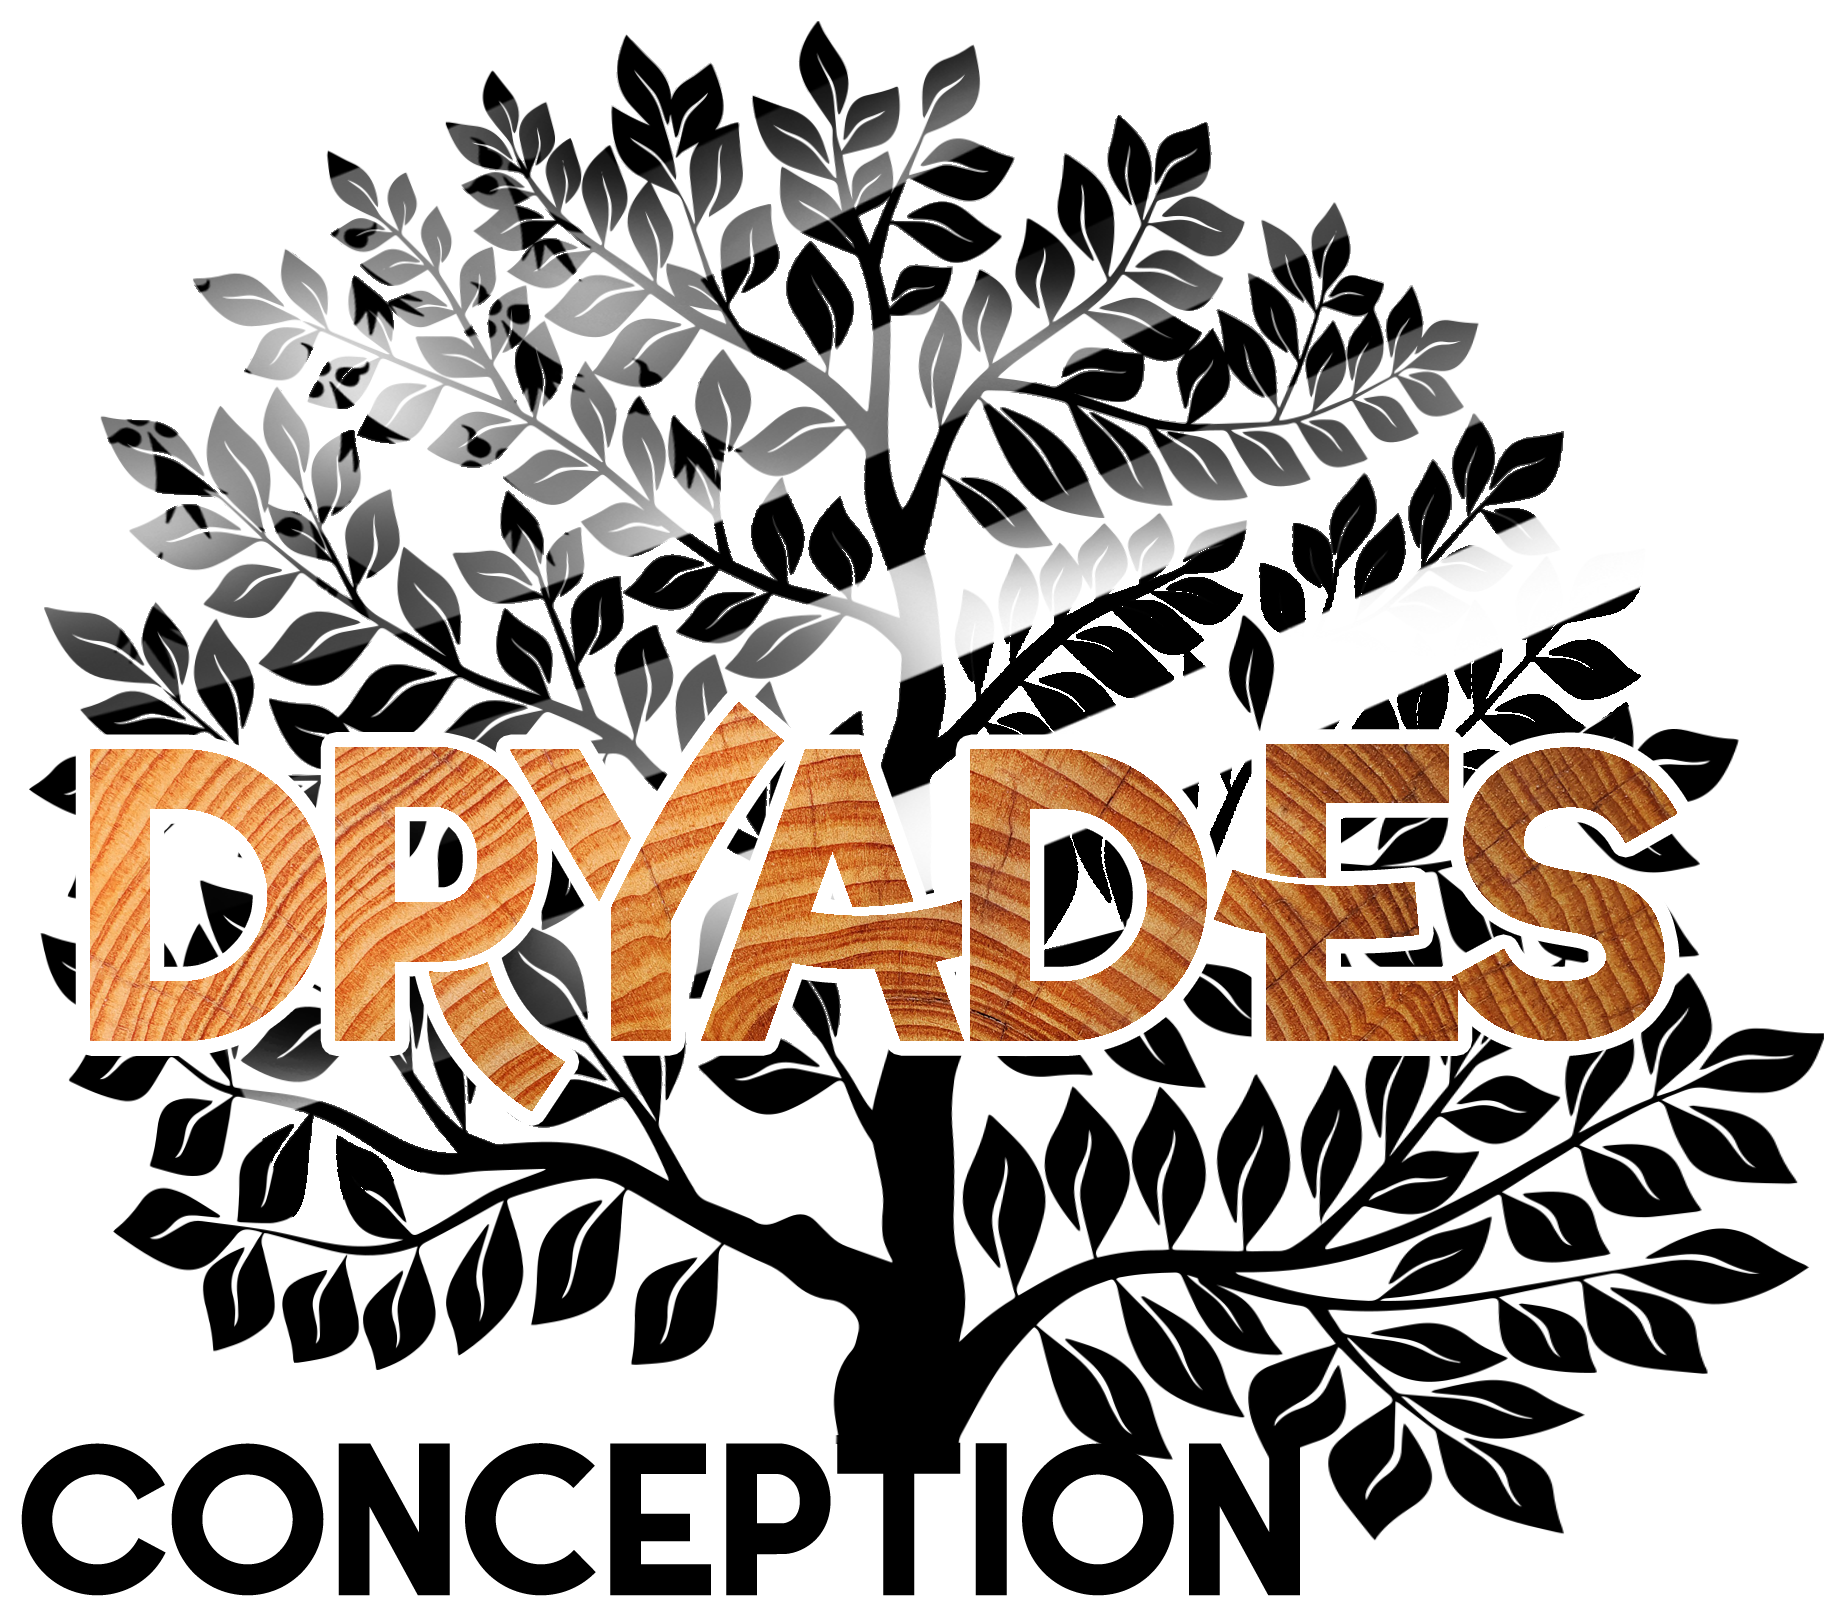 Dryades Conception